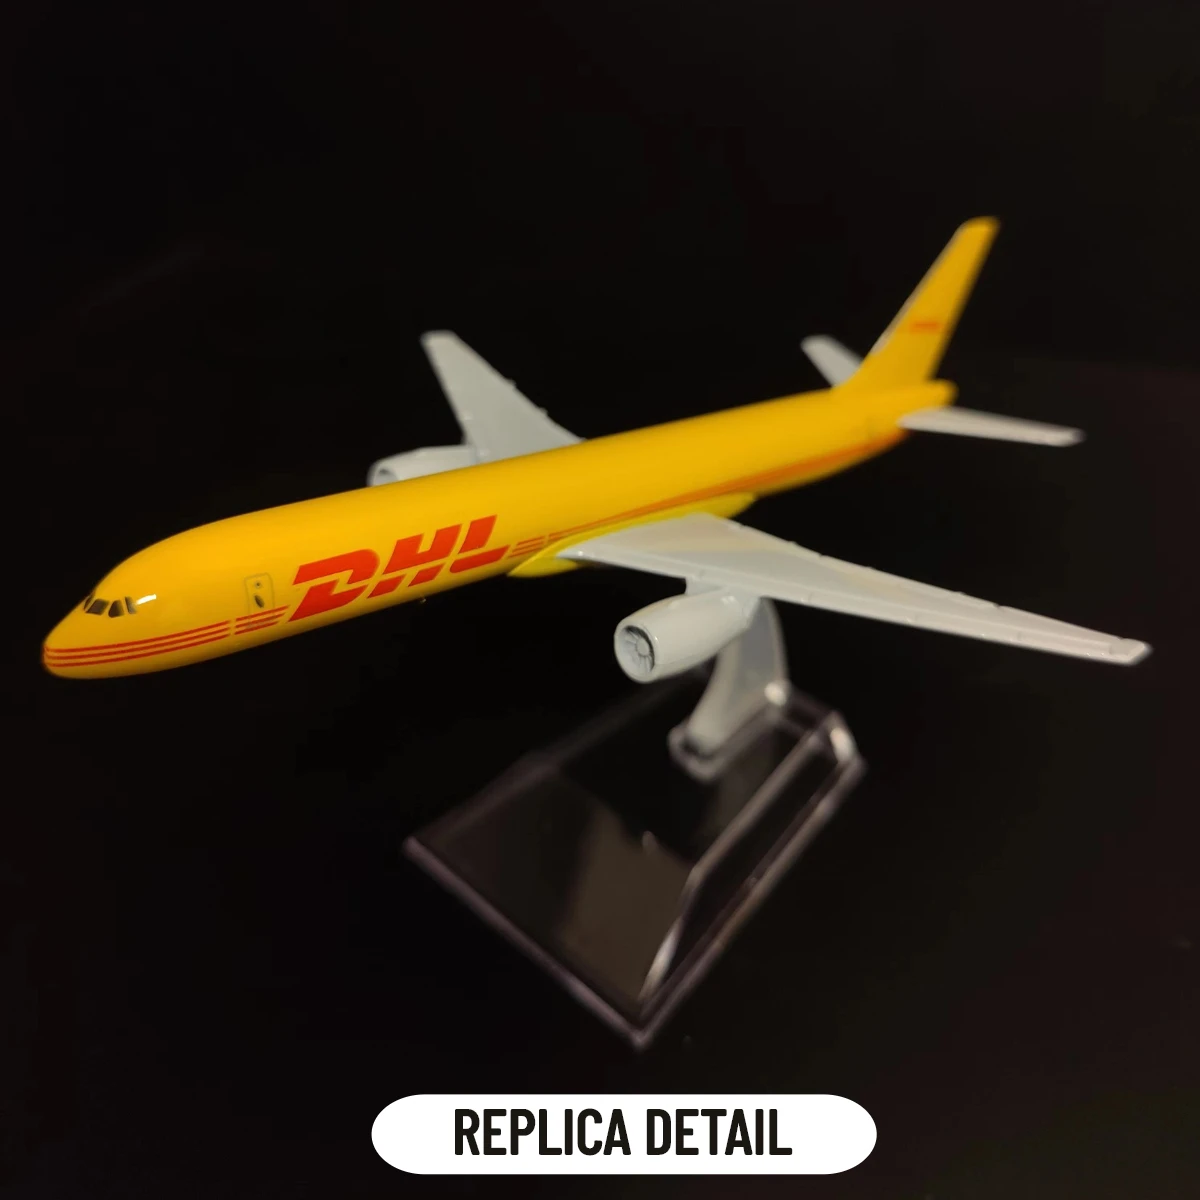 Etal aircraft replica dhl boeing 757 airplane diecast model plane aeroplane home office thumb200